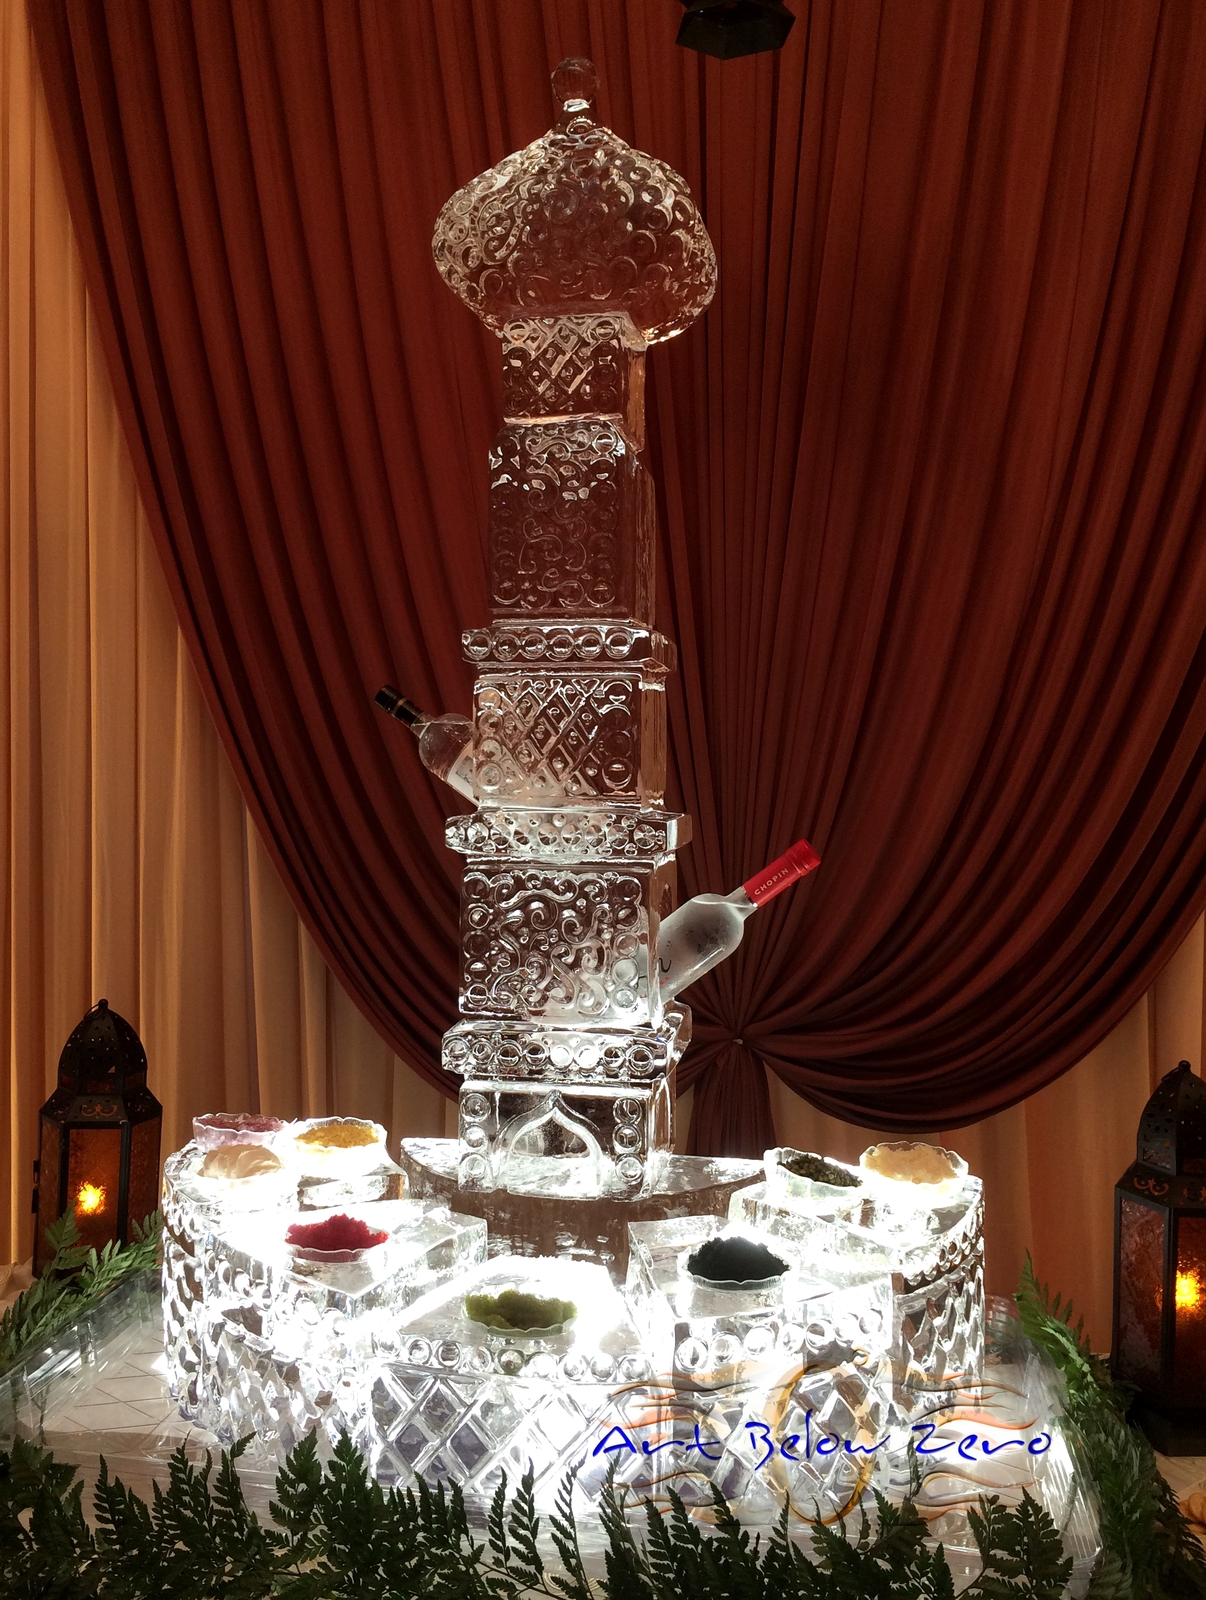 Arabian_nights_theme__caviar_station_ice_sculpture